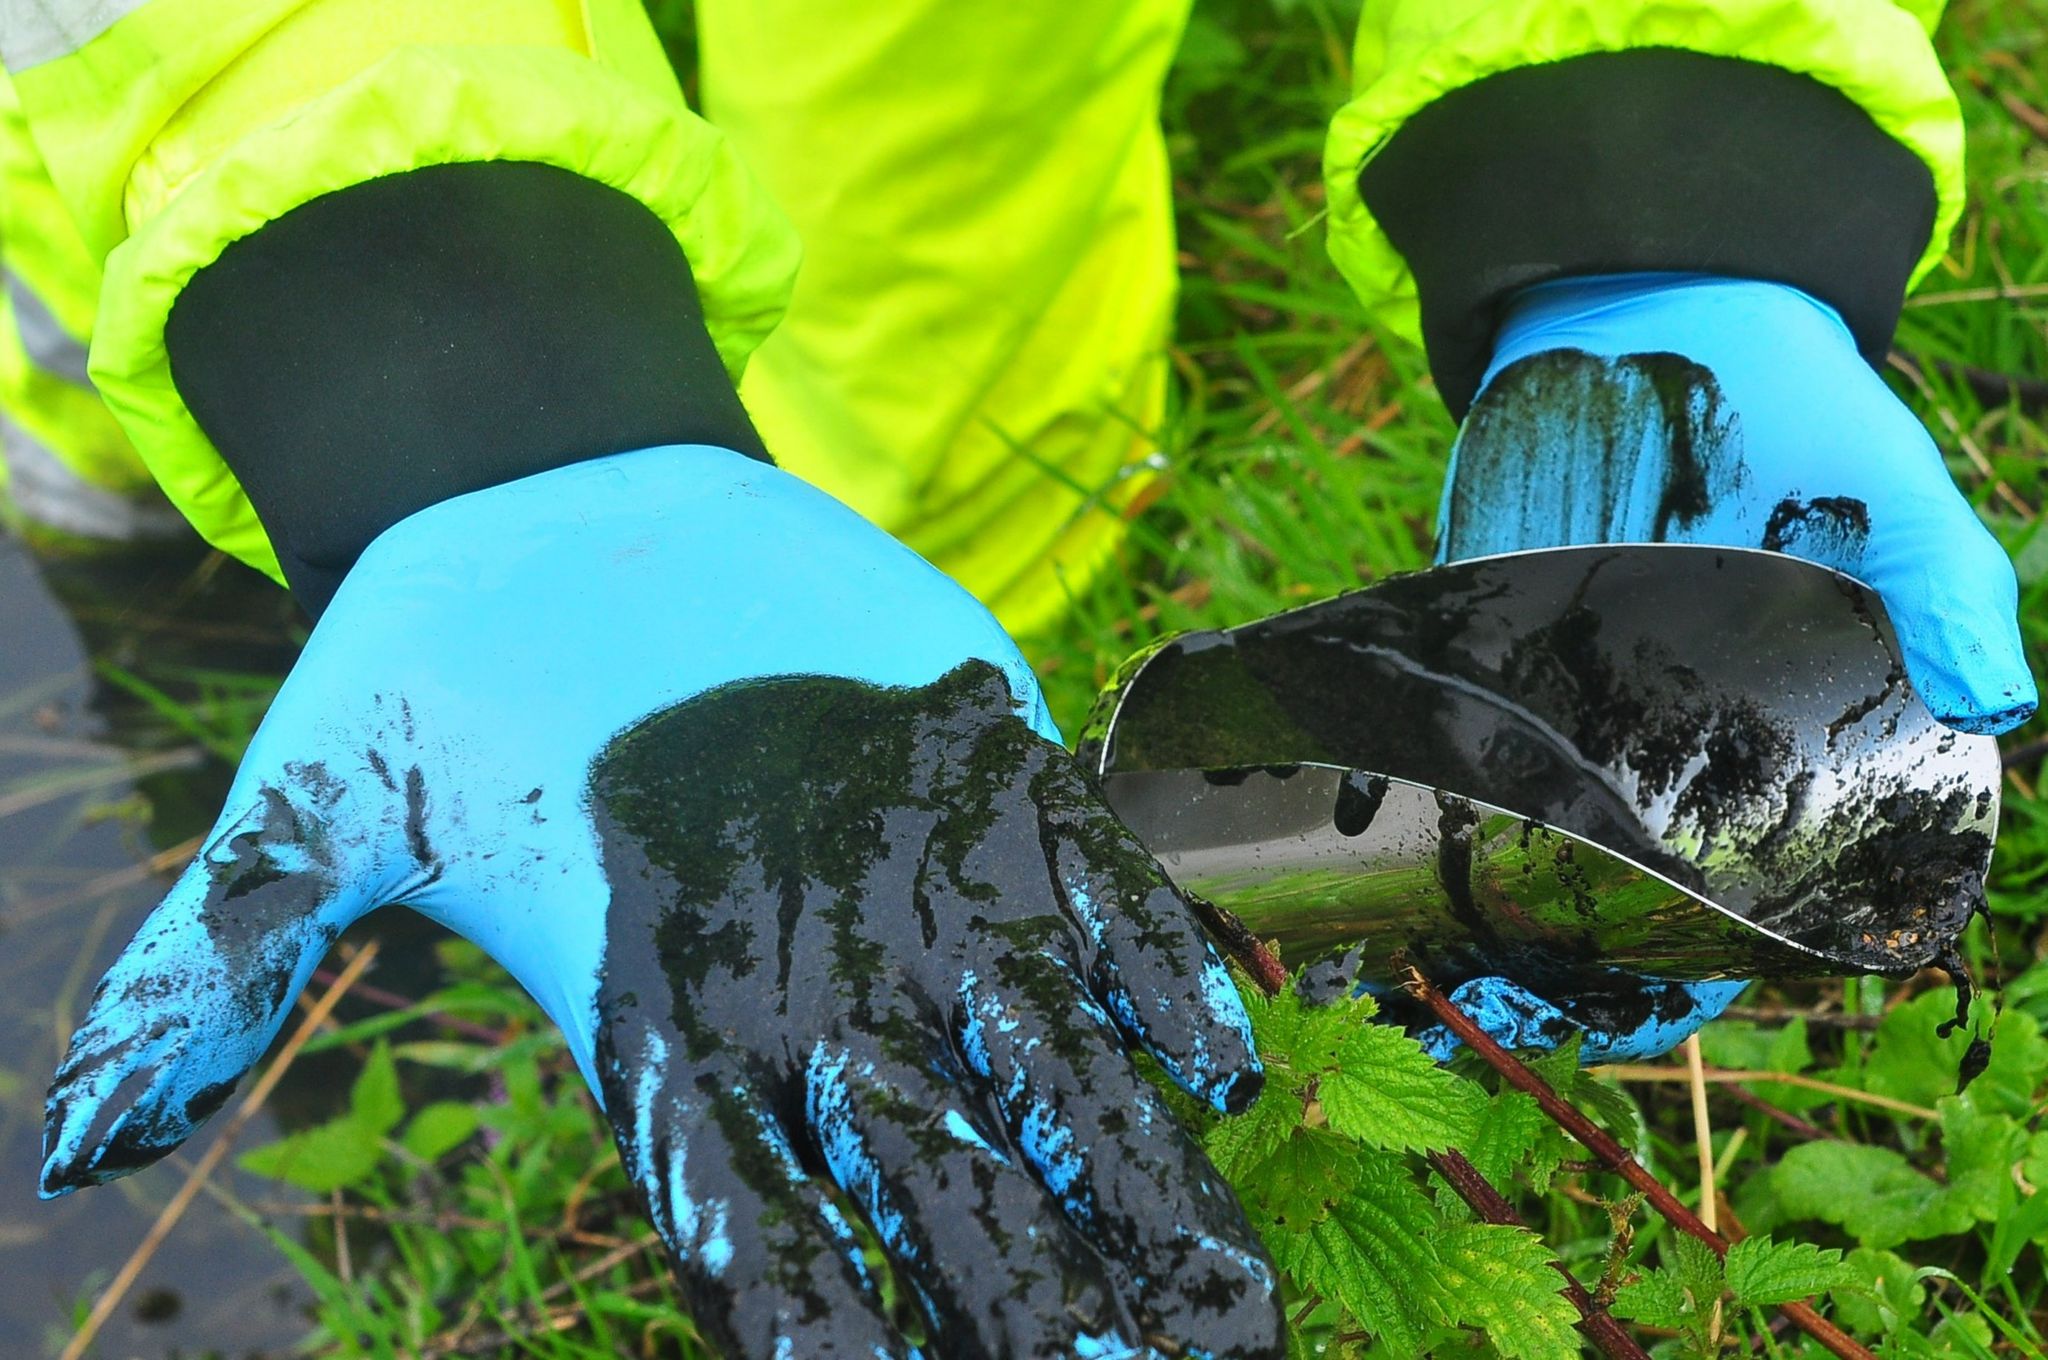 'Black sludge' on blue gloves